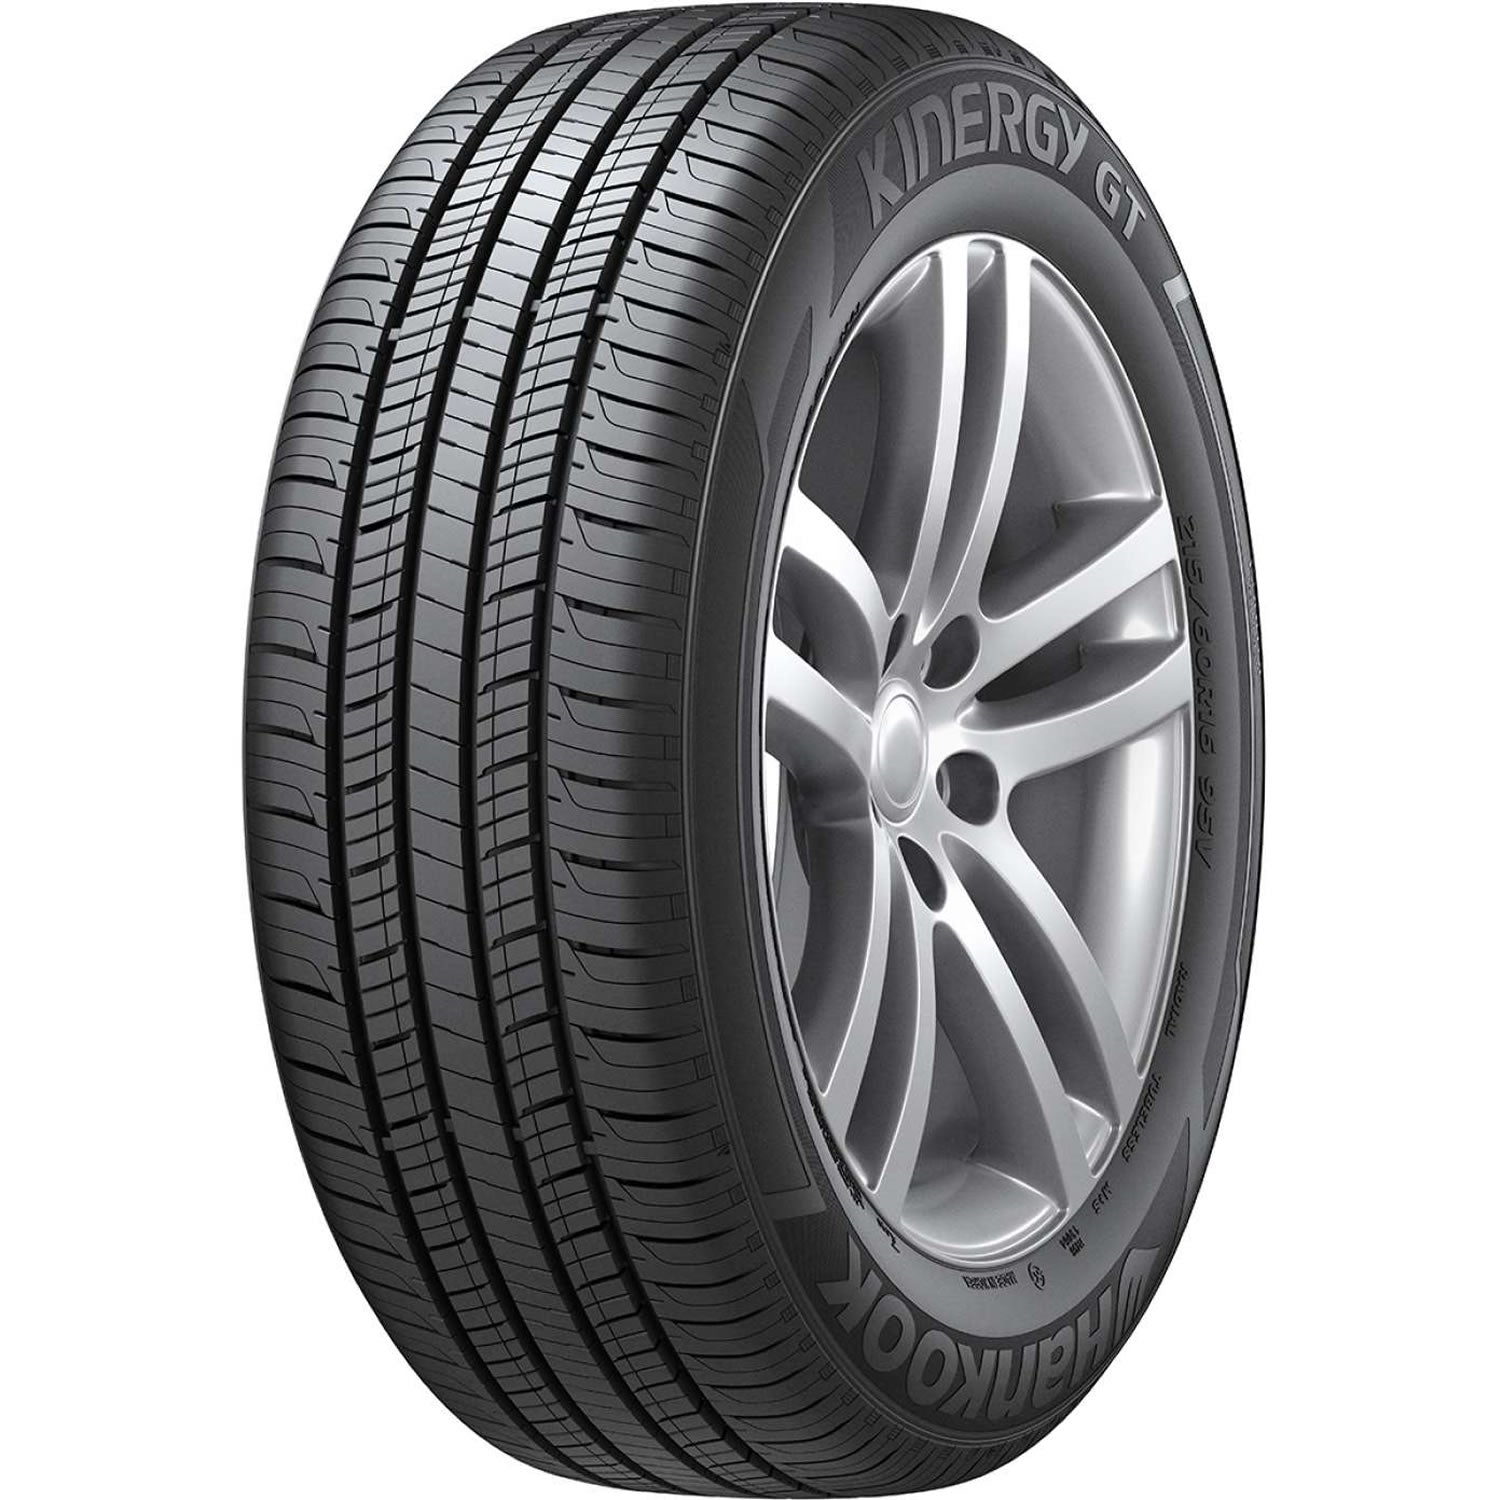 HANKOOK KINERGY GT 215/45R17 XL (24.7X8.3R 17) Tires